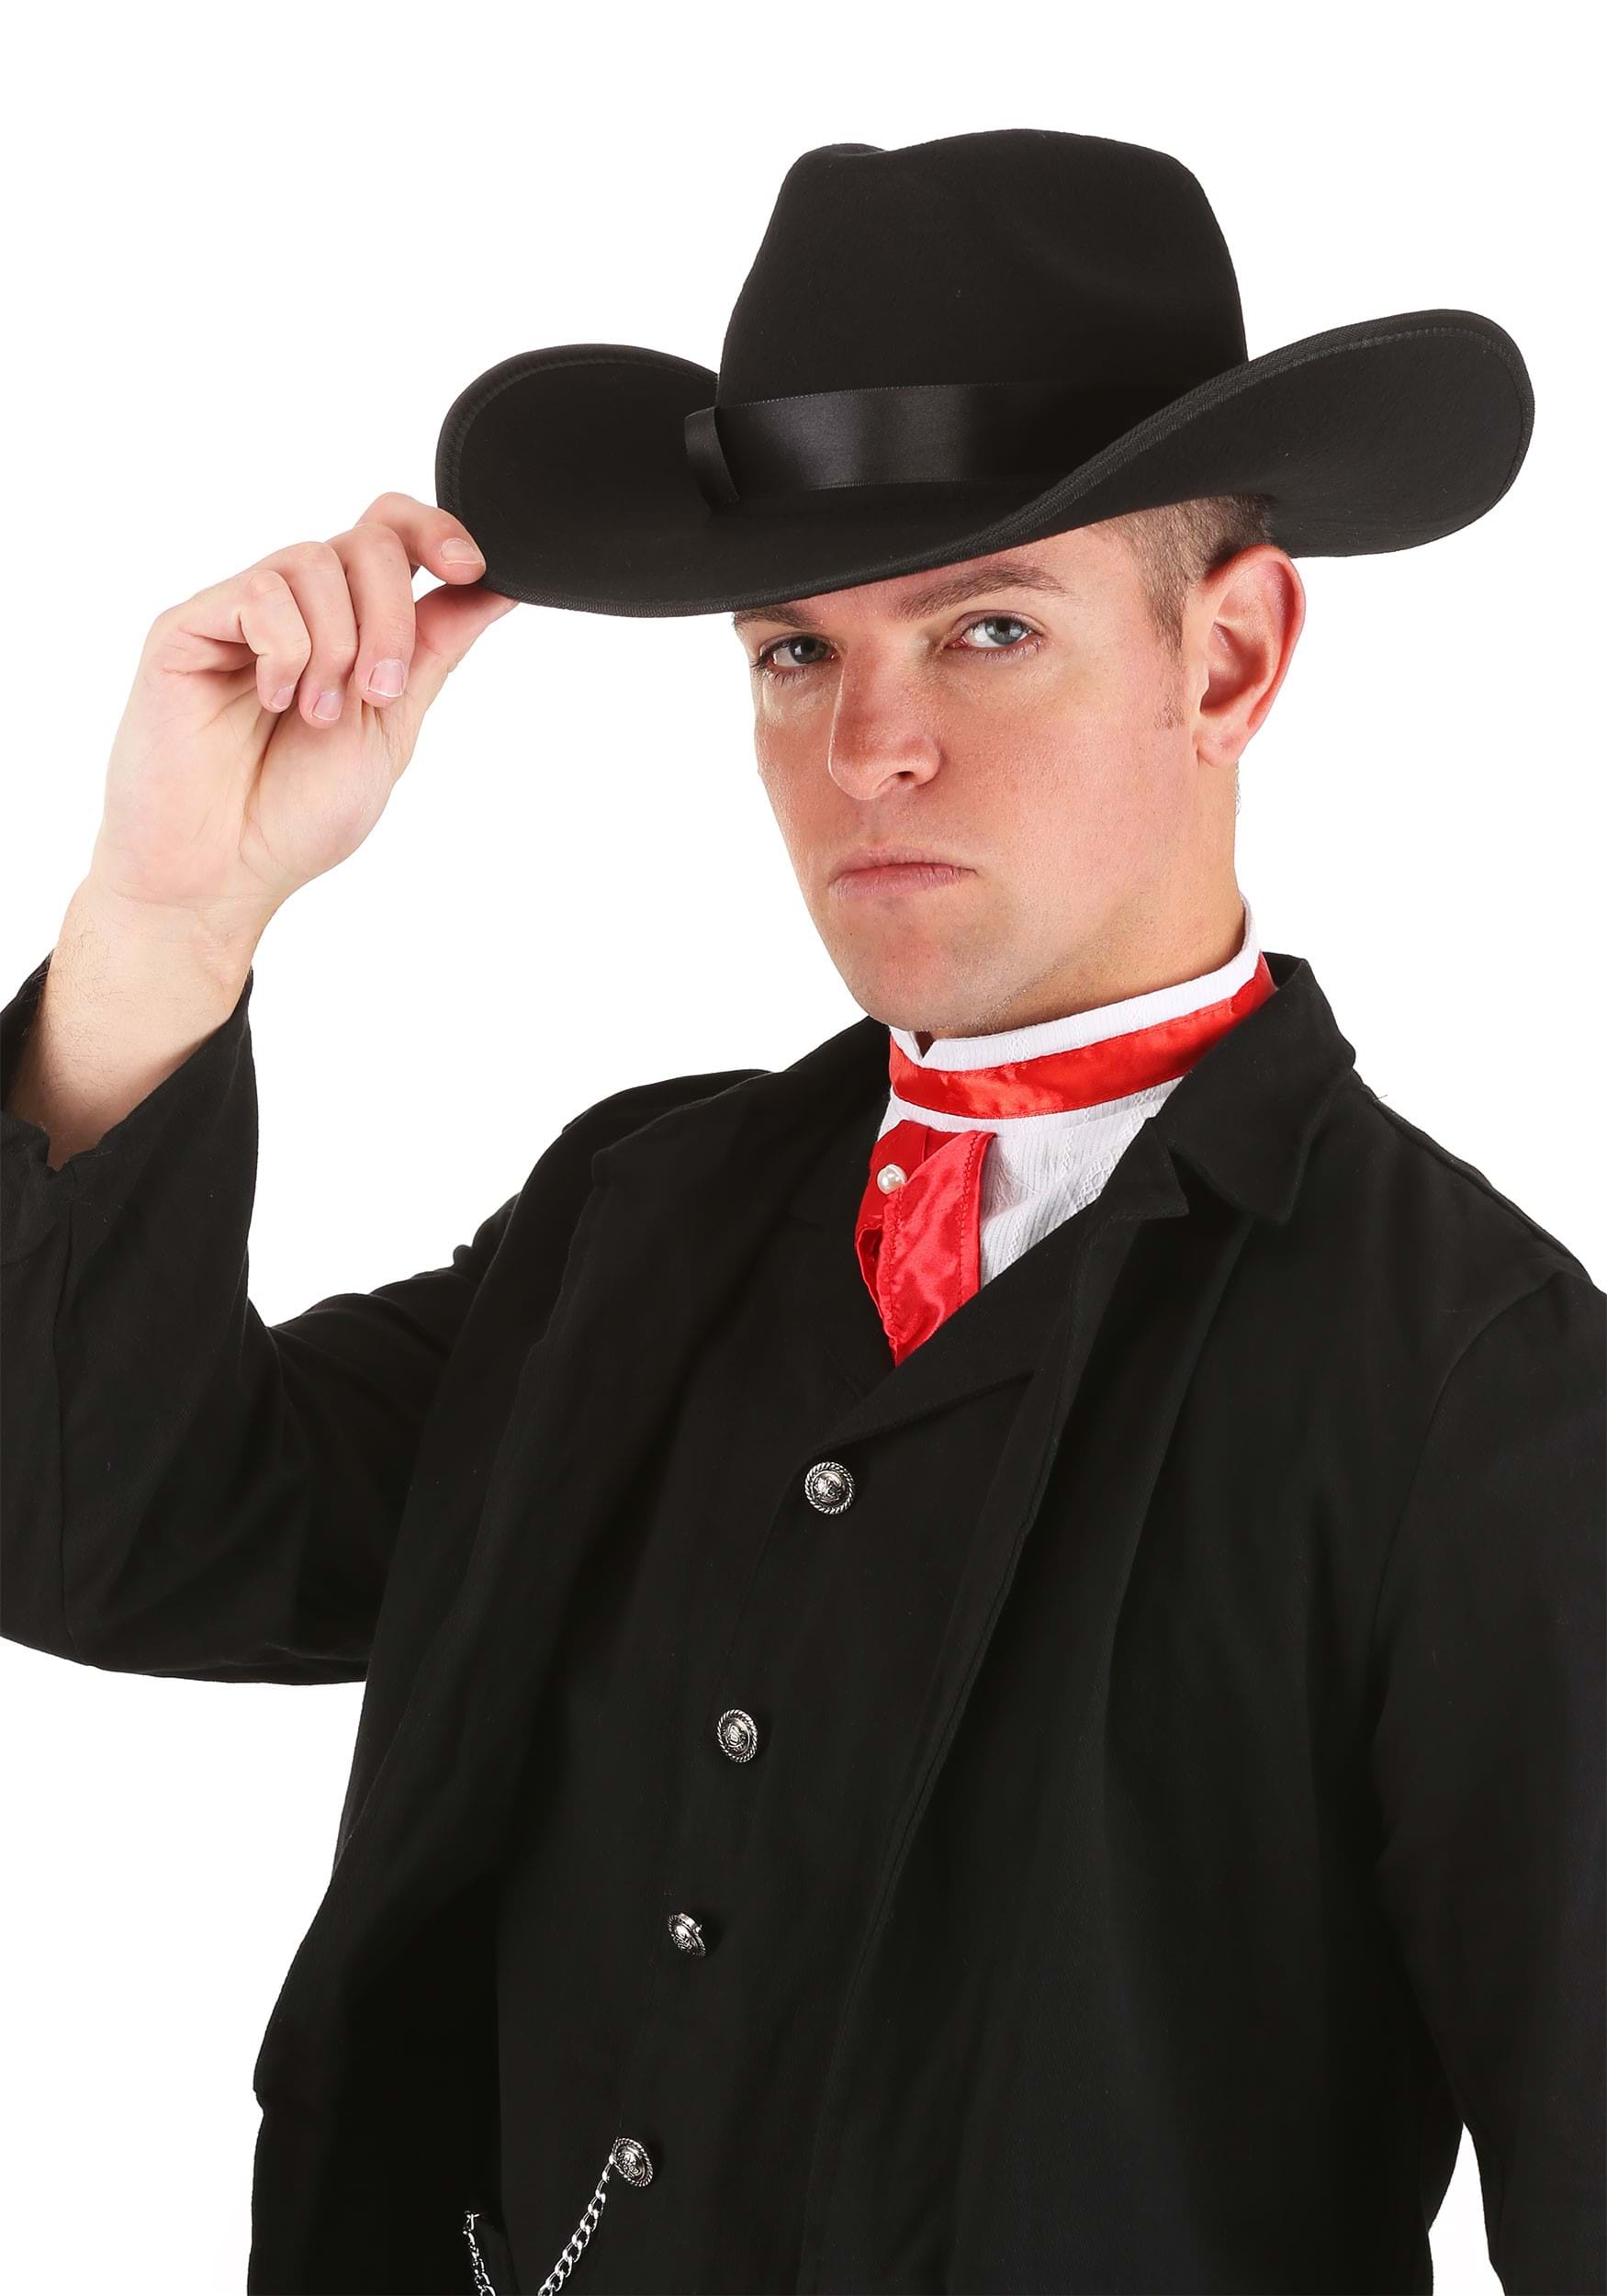 Black Outlaw Cowboy Costume Hat